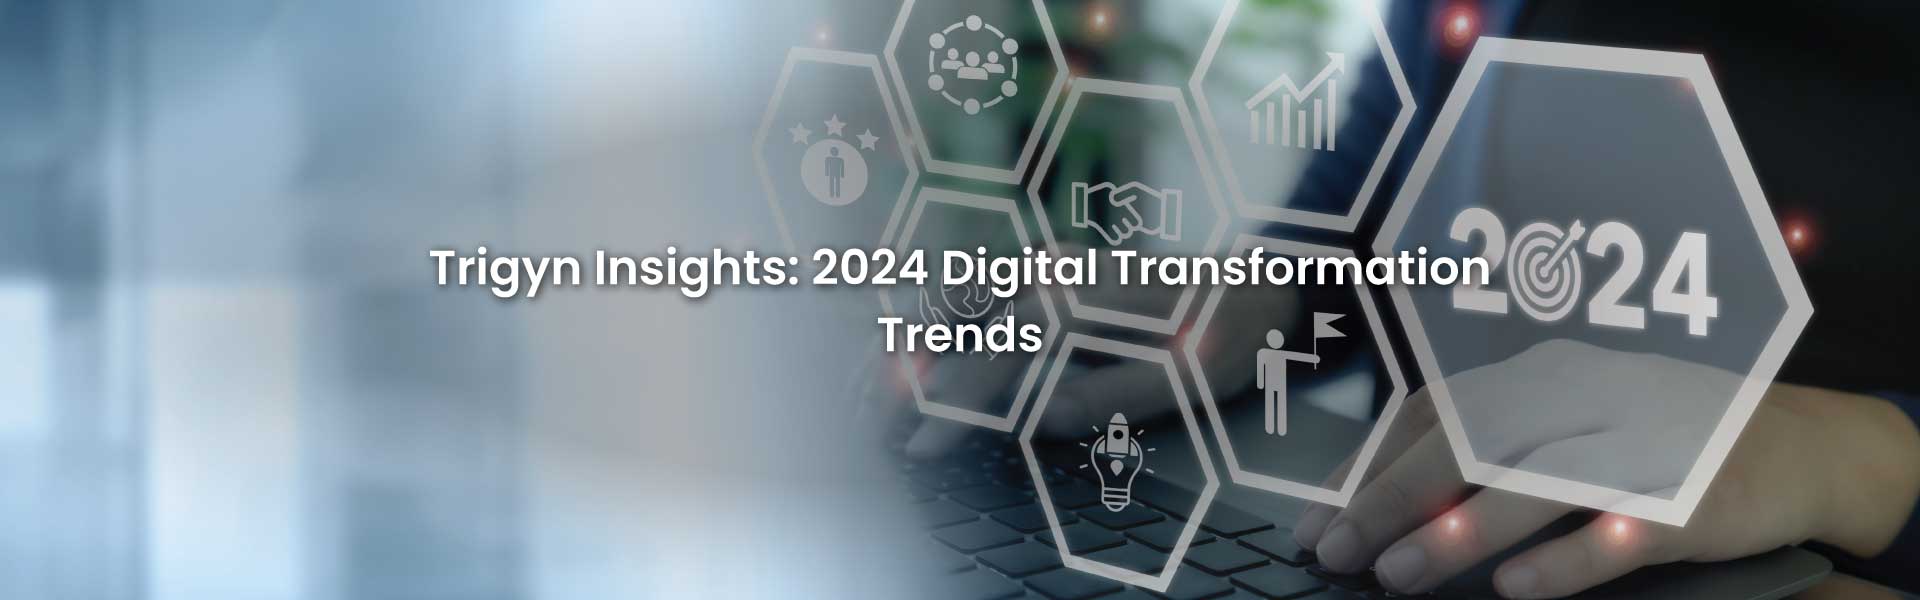 Digital Transformation Trends for 2024